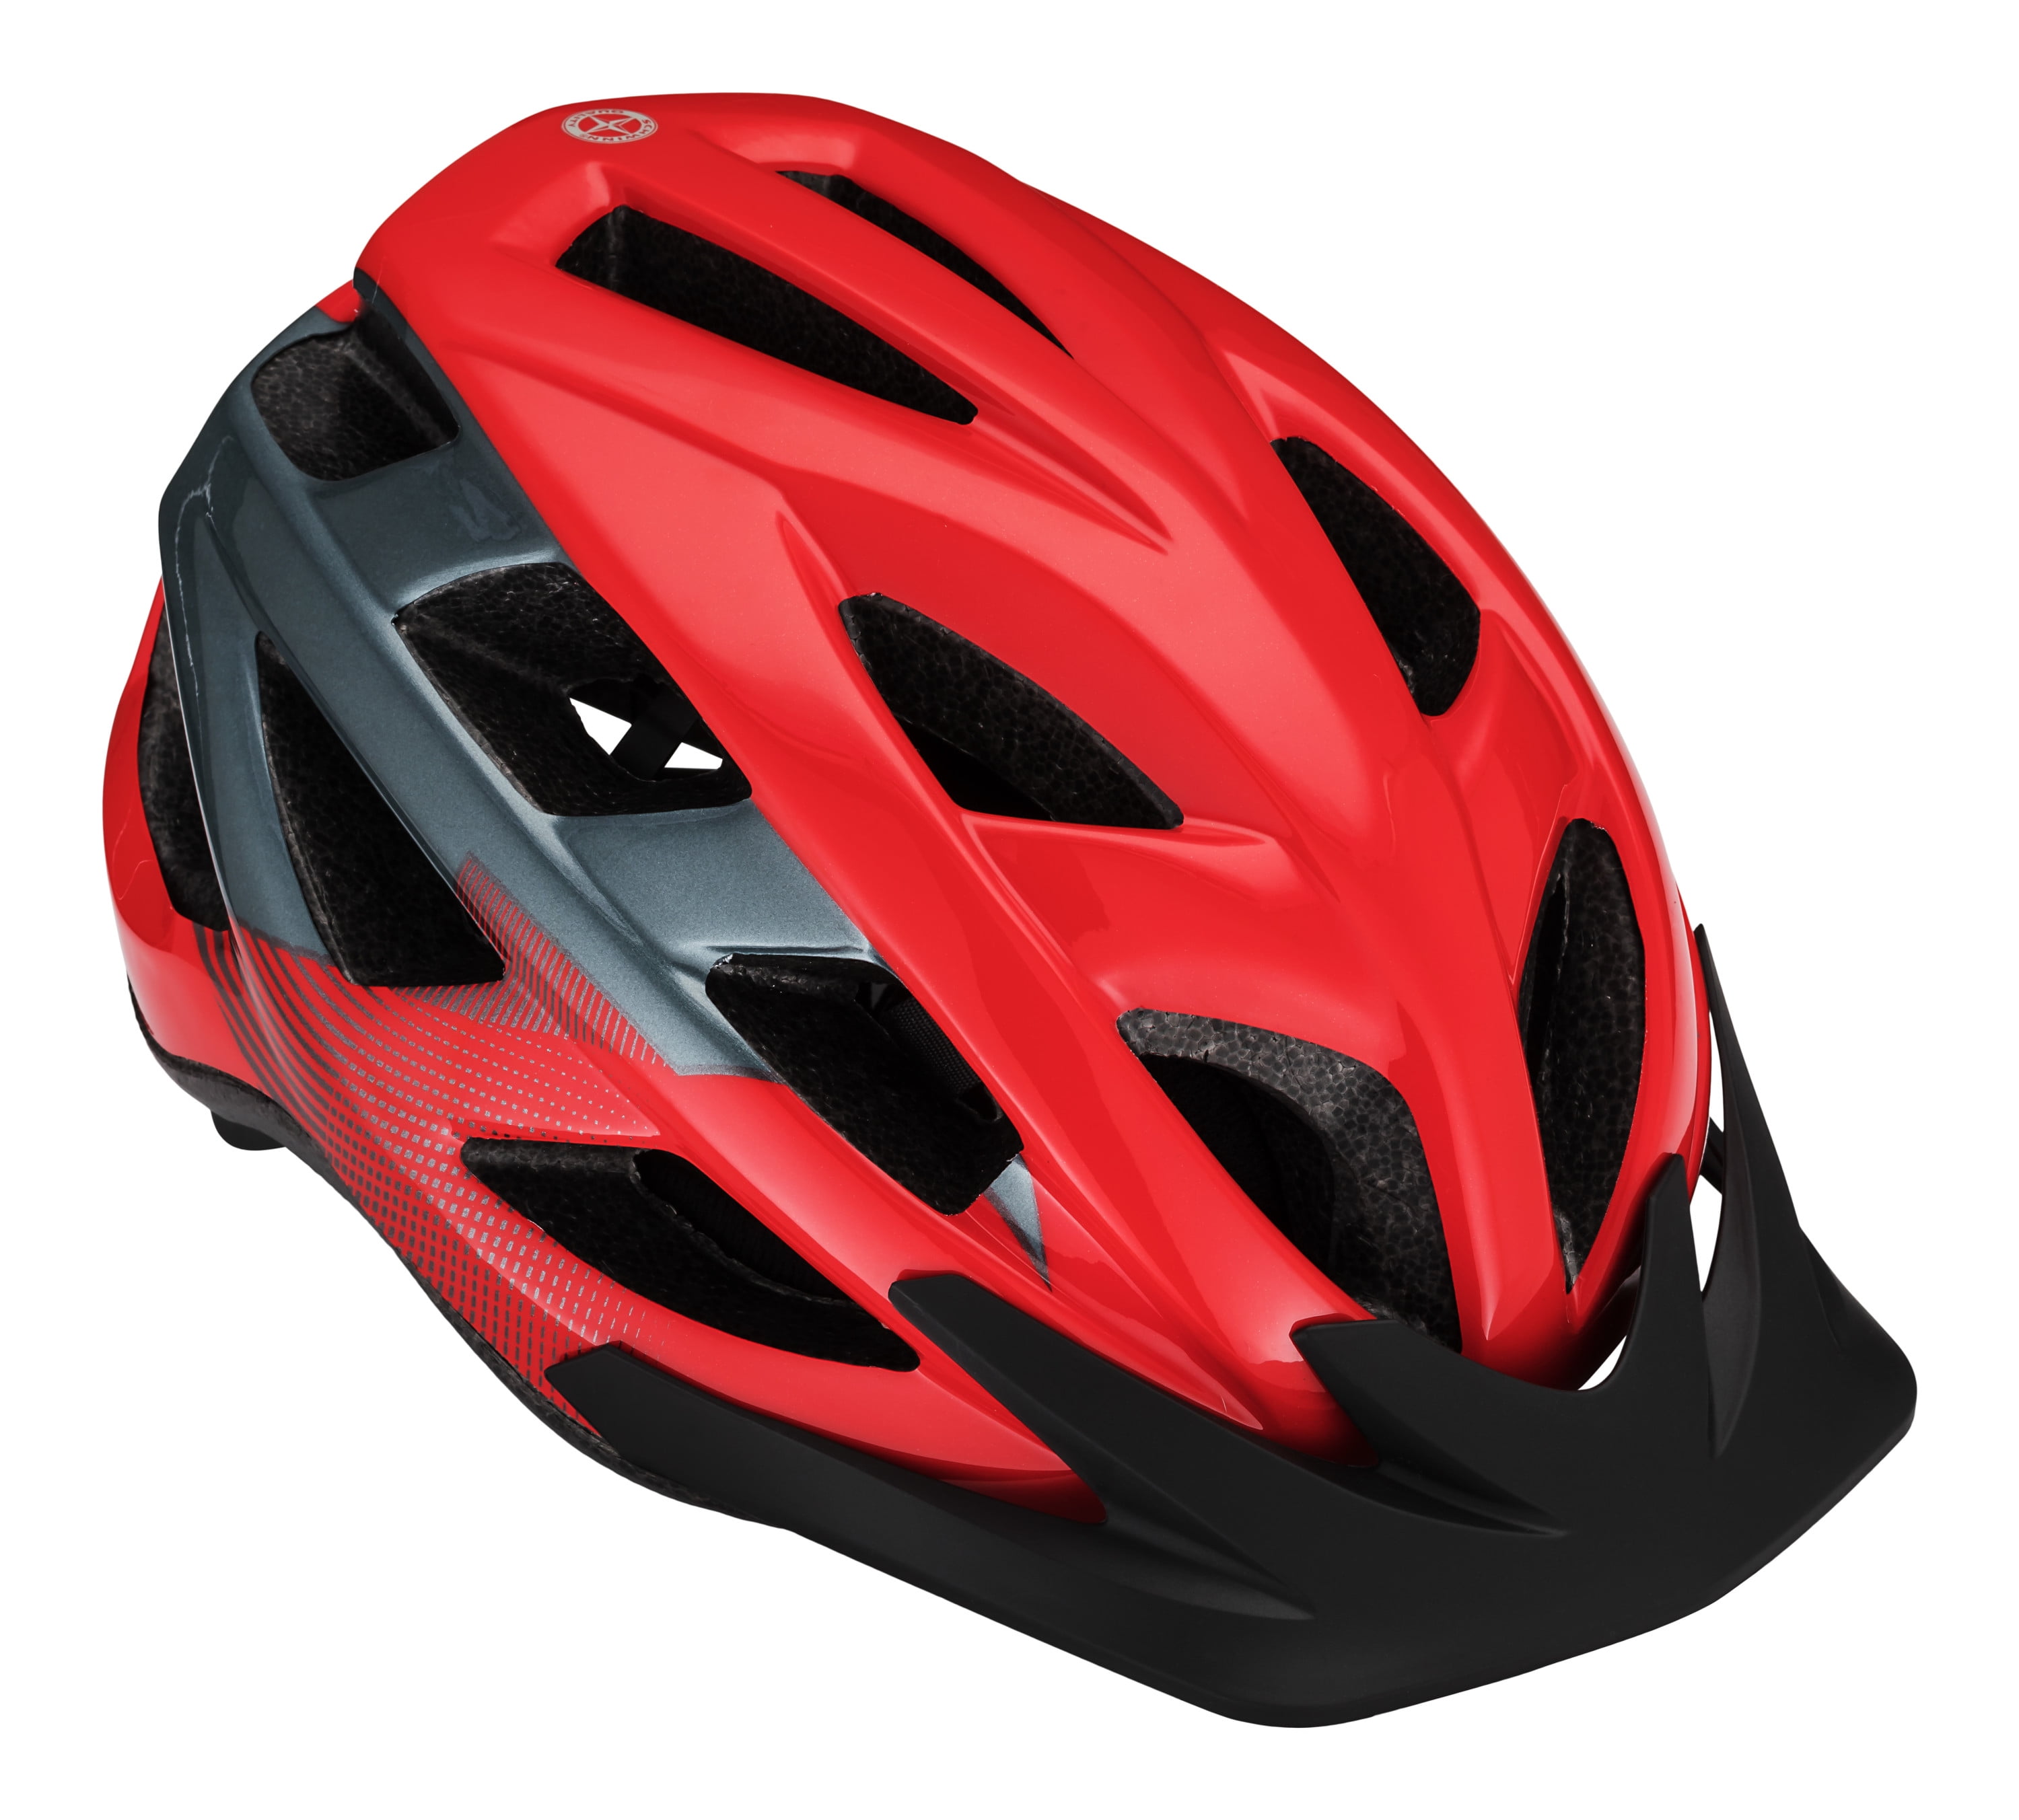 Easy Adjust Fit 360 Comfort Gray/Blue New Details about   Schwinn Dash Adult Bike Helmet Age 14 